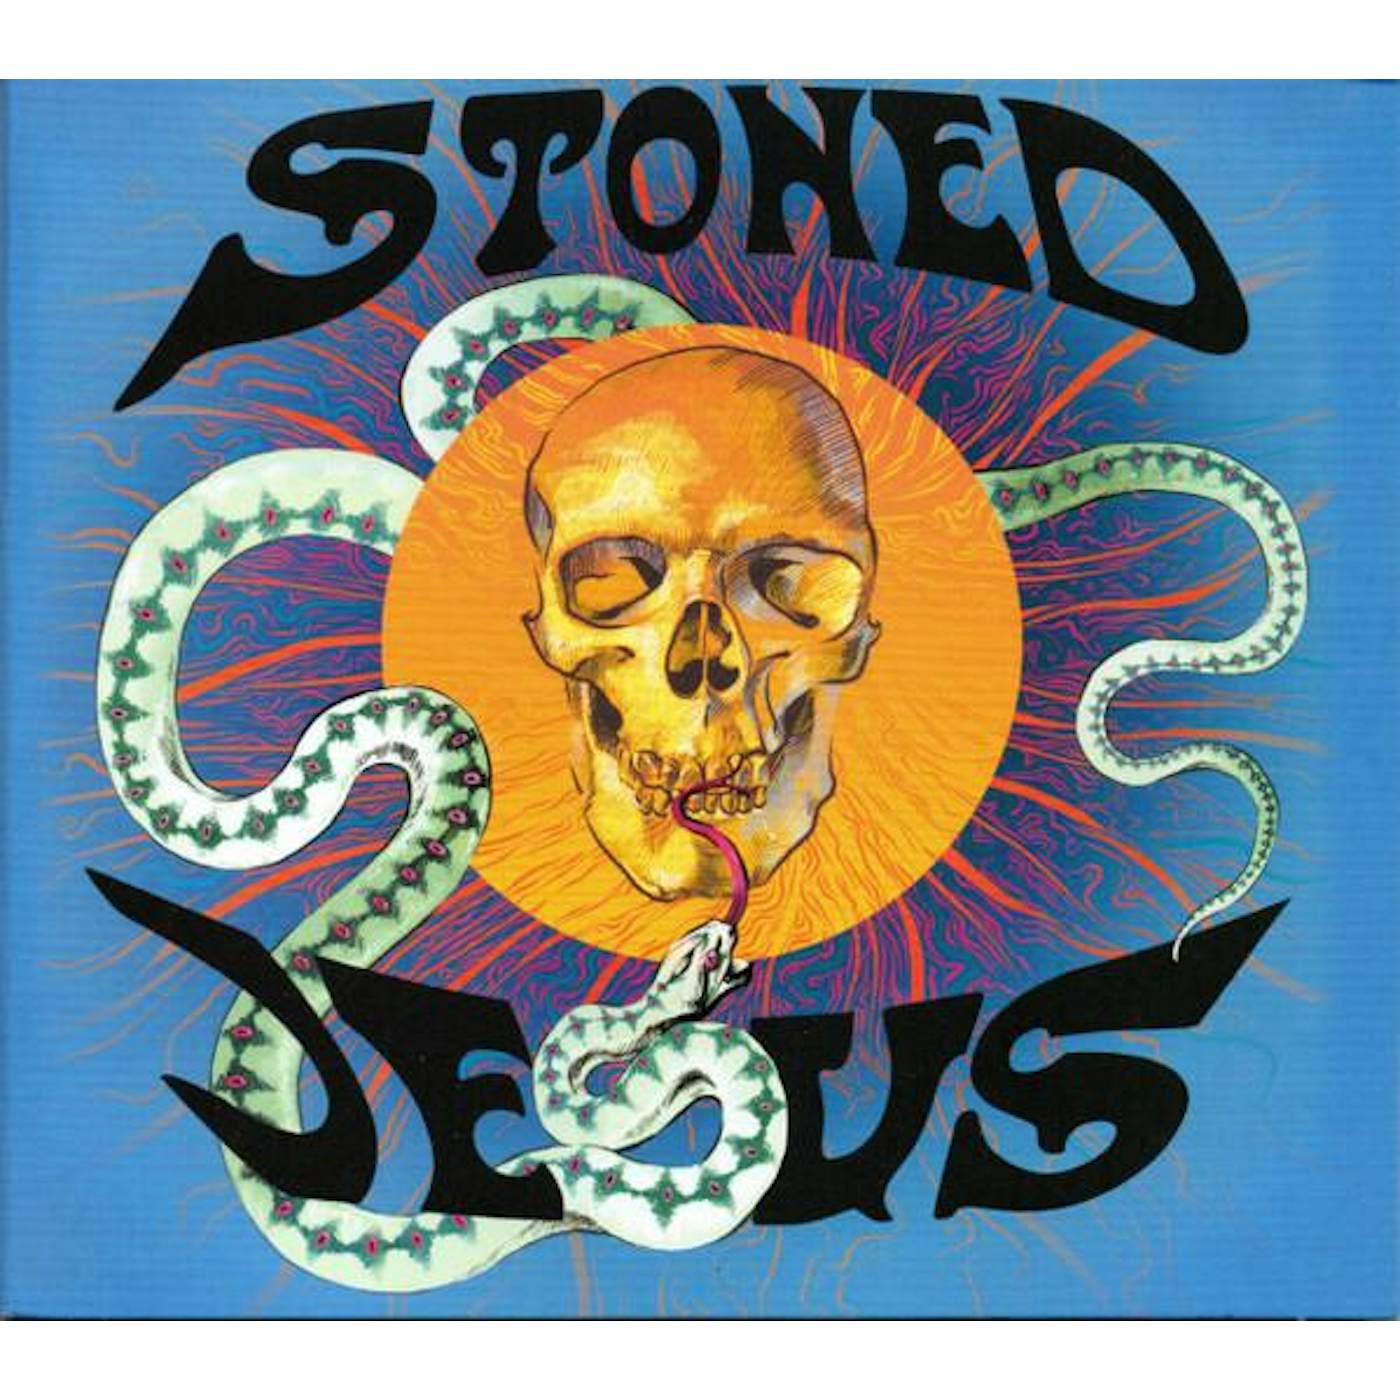 Stoned Jesus FIRST COMMUNION CD